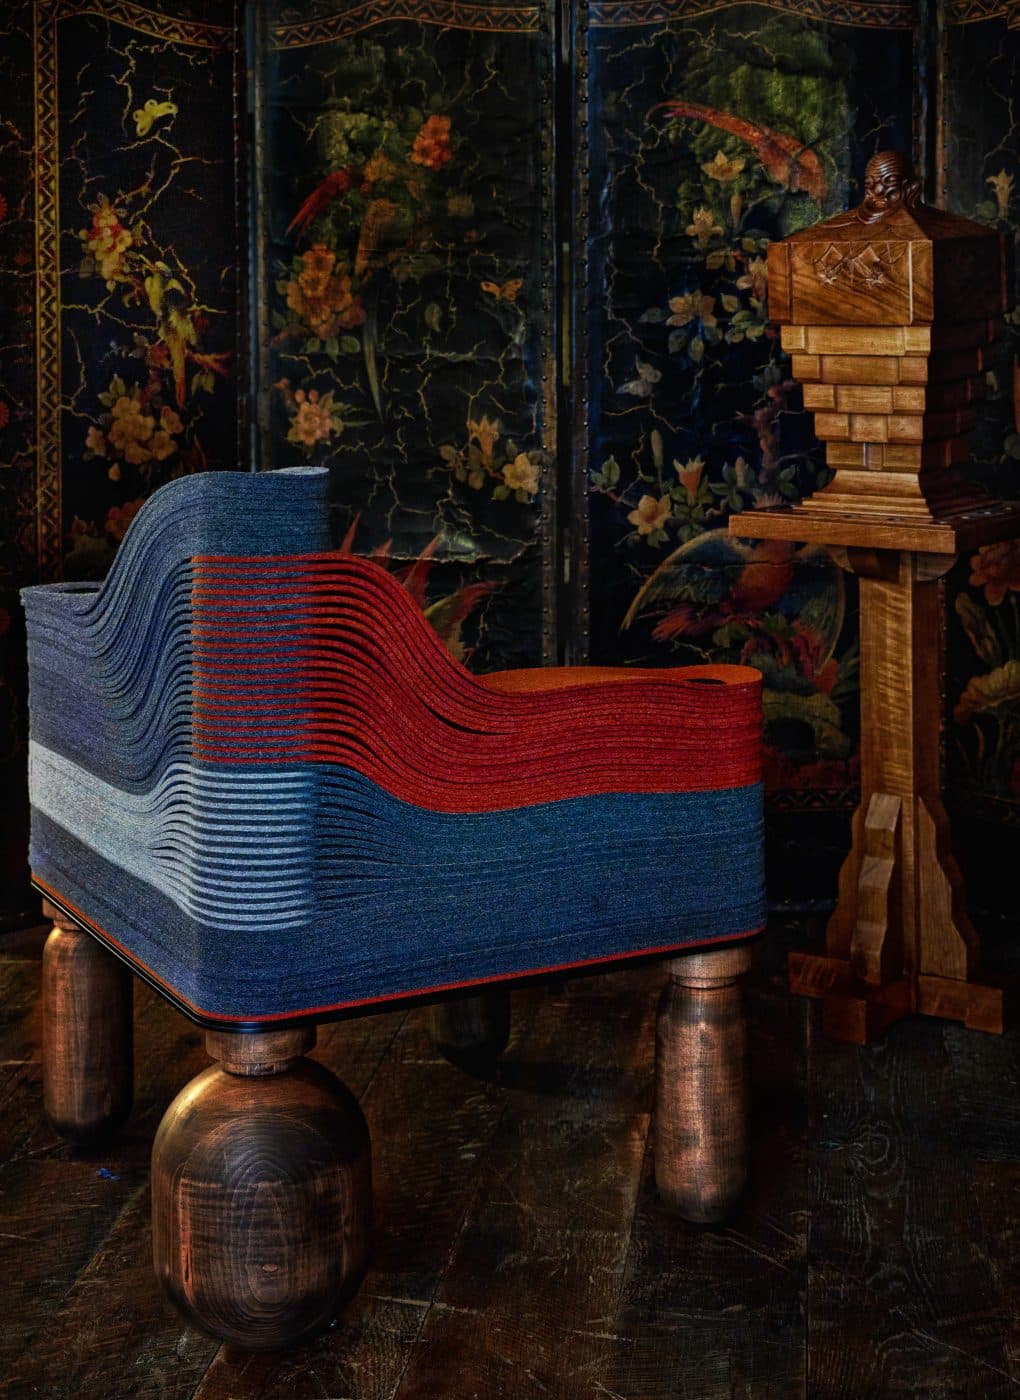 the Raki chair by Alexandra Champalimaud